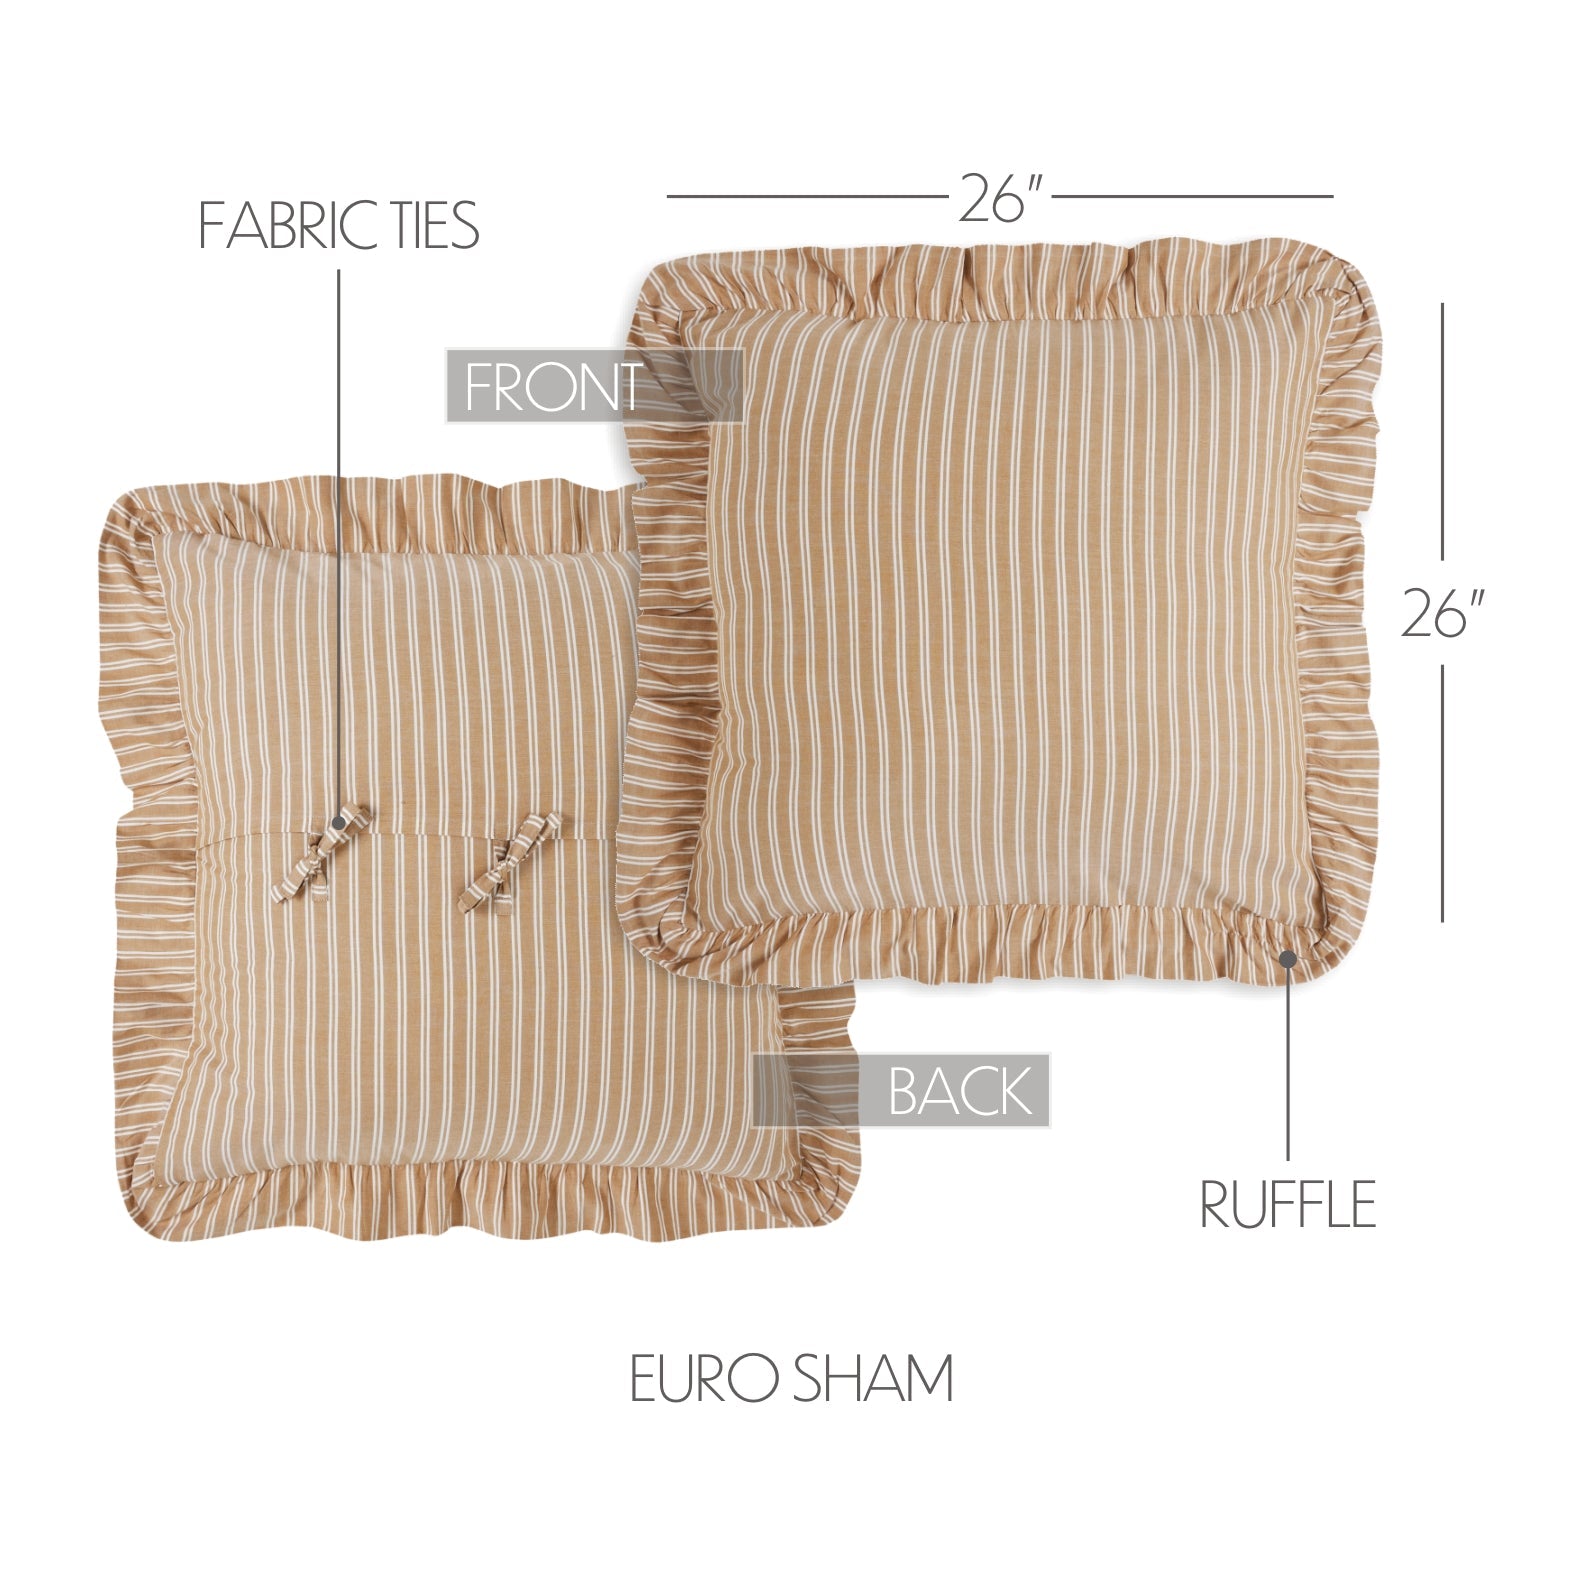 Dorset Fabric Euro Sham 26x26 VHC Brands